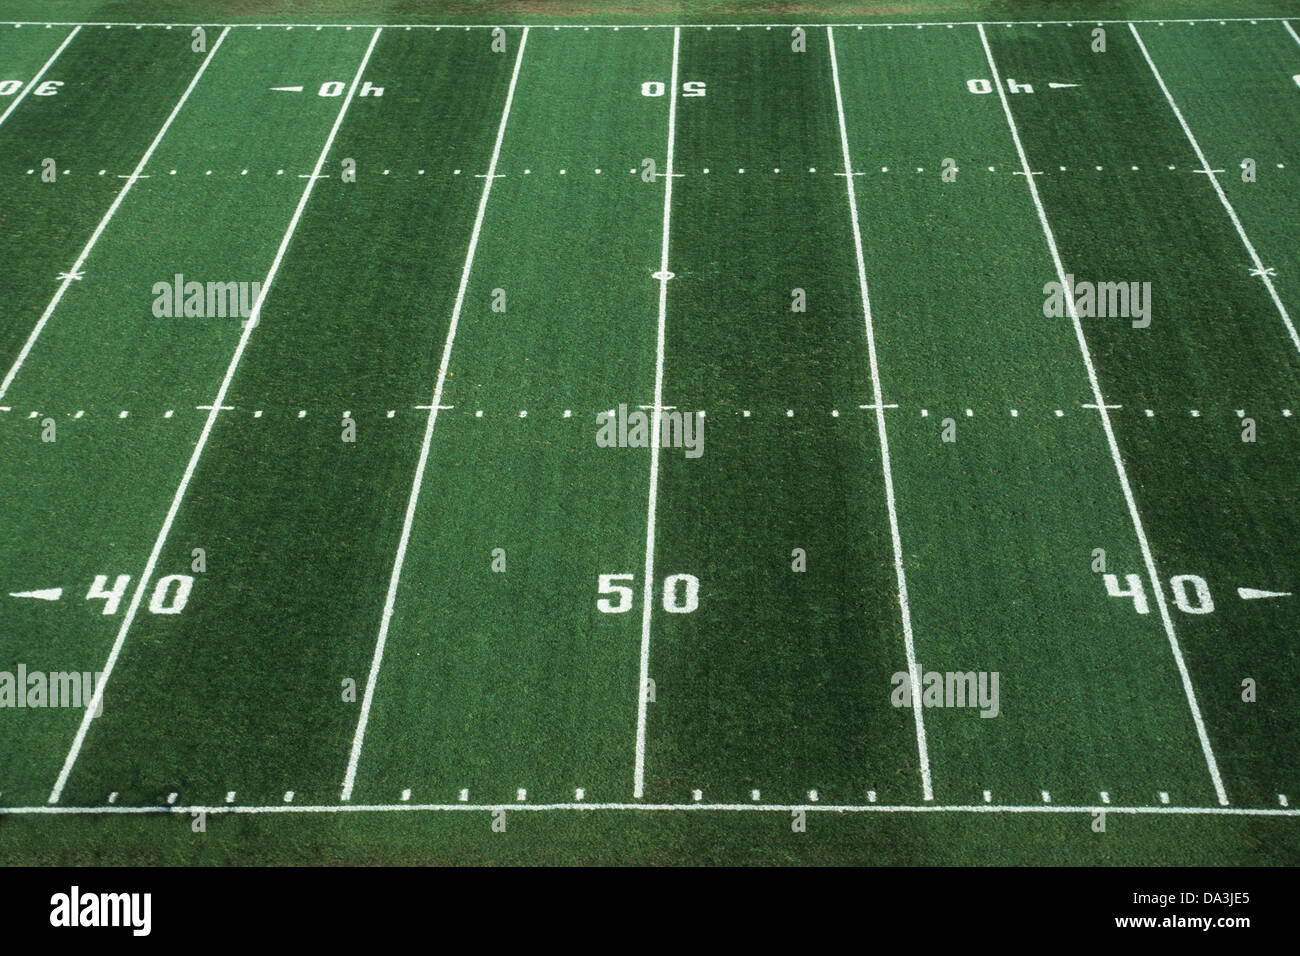 50 yard line on American Football field. Stock Photo